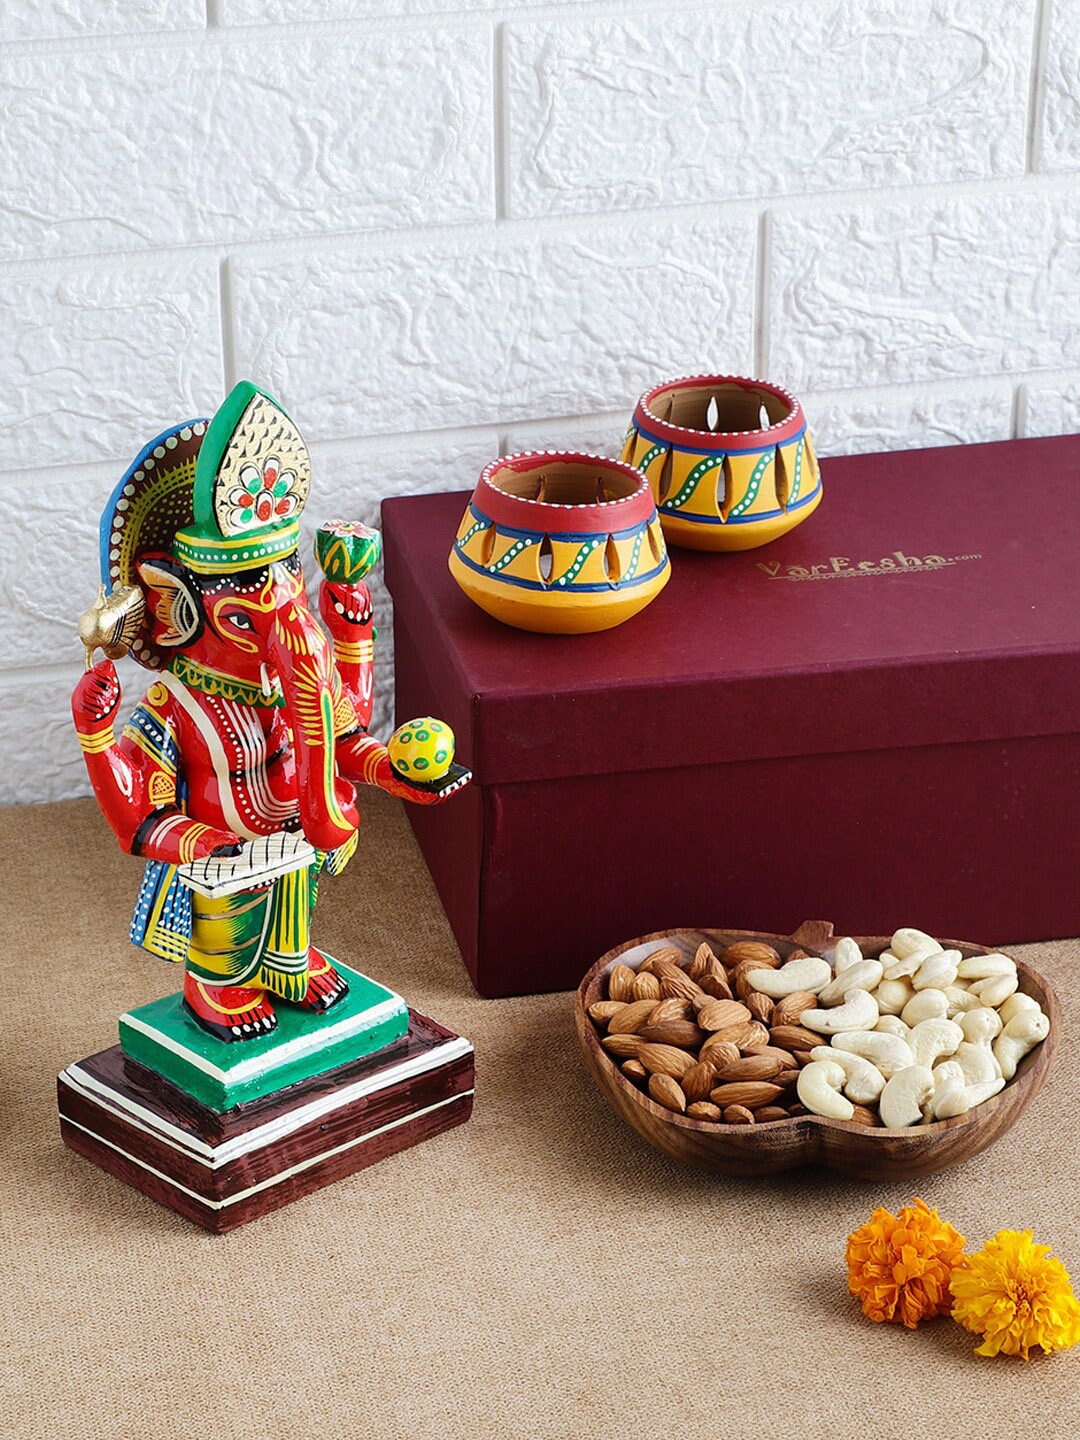 

VarEesha Printed Upahaar Hand-made Ganesha Gift Sets, Multi